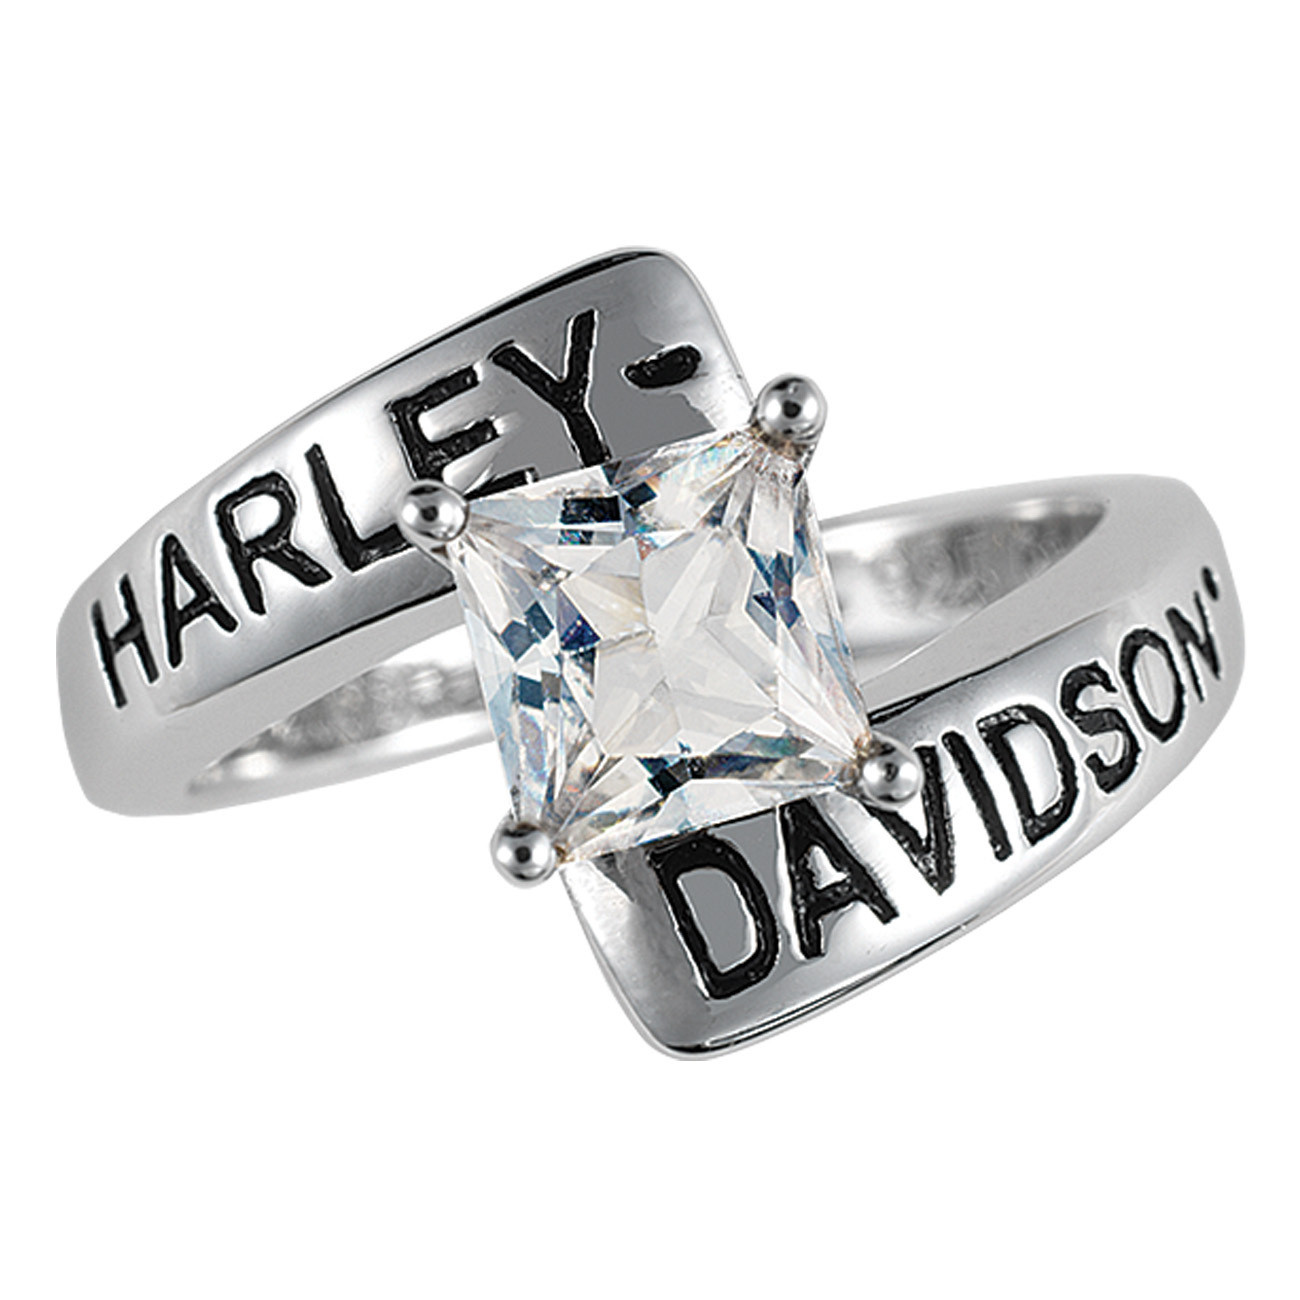 Harley Davidson Wedding Bands
 Harley Davidson La s Crossroads Birthstone Ring Woman